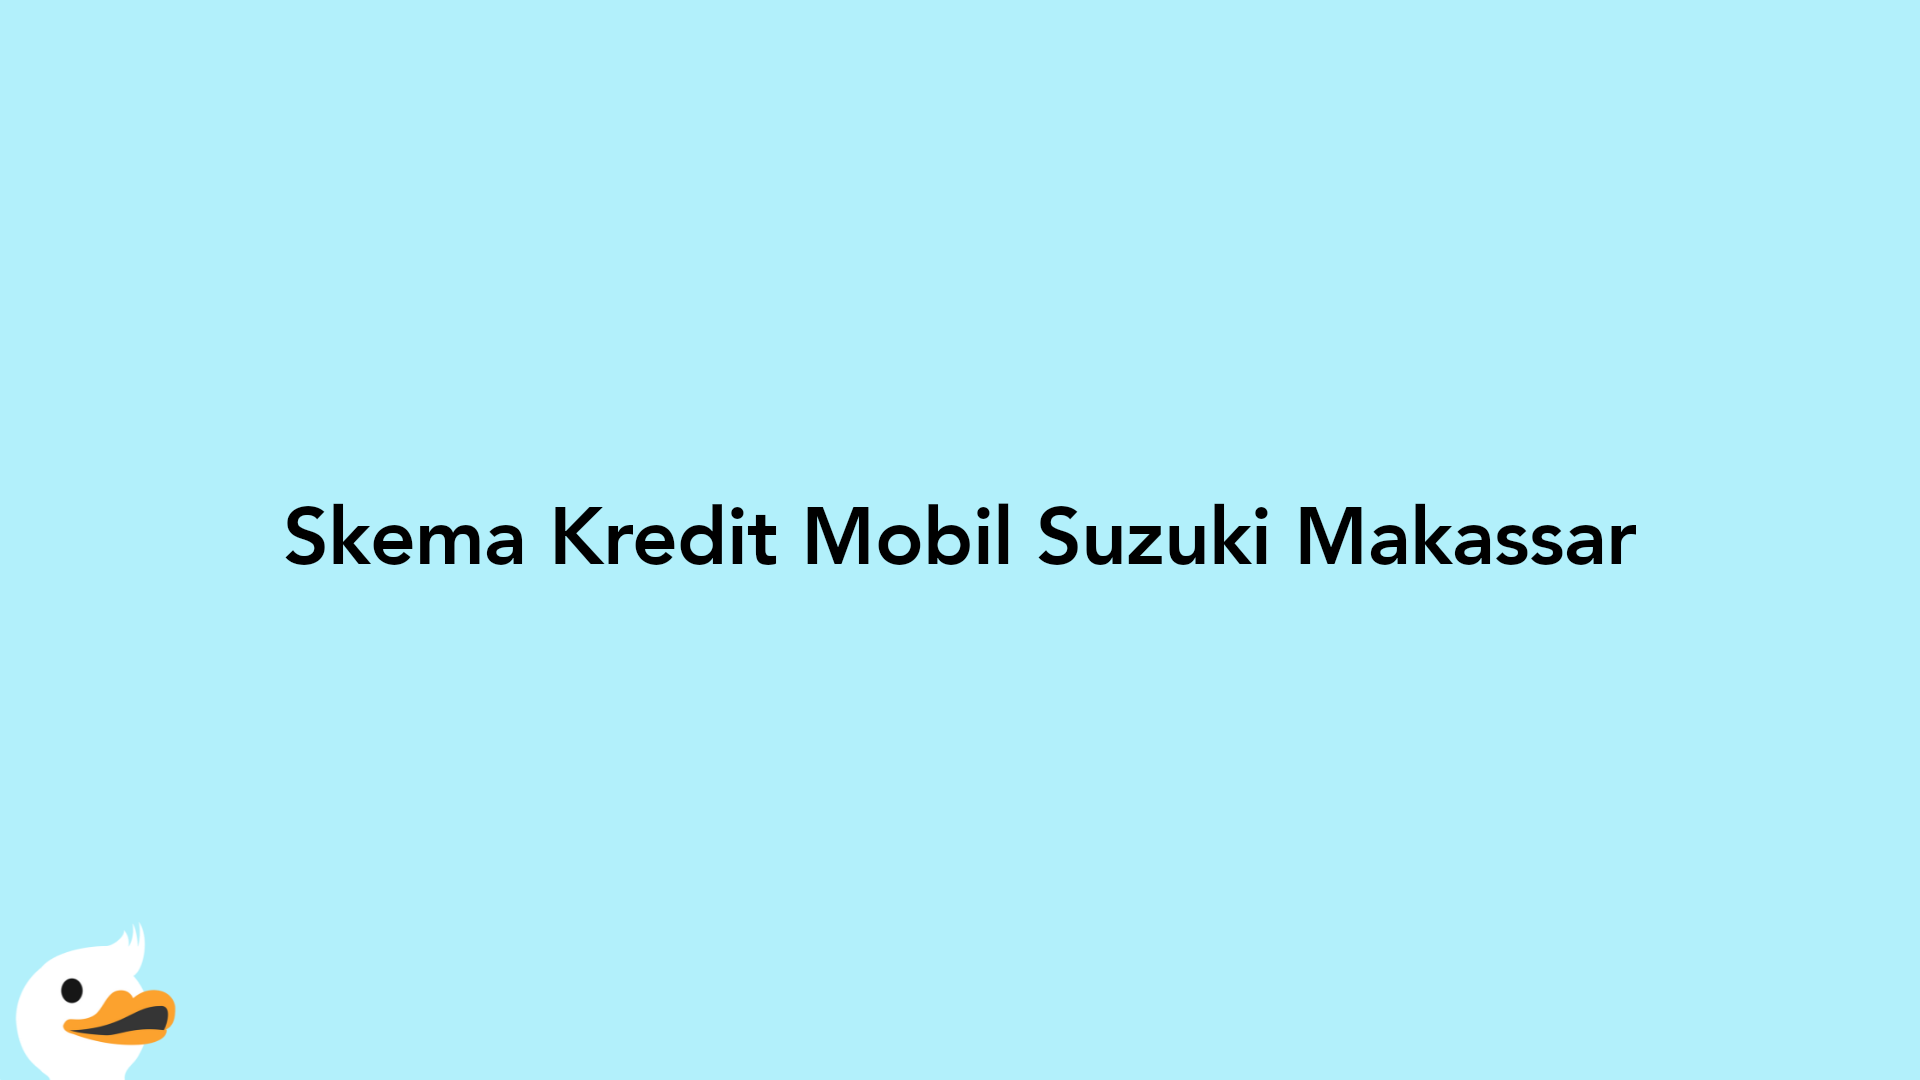 Skema Kredit Mobil Suzuki Makassar